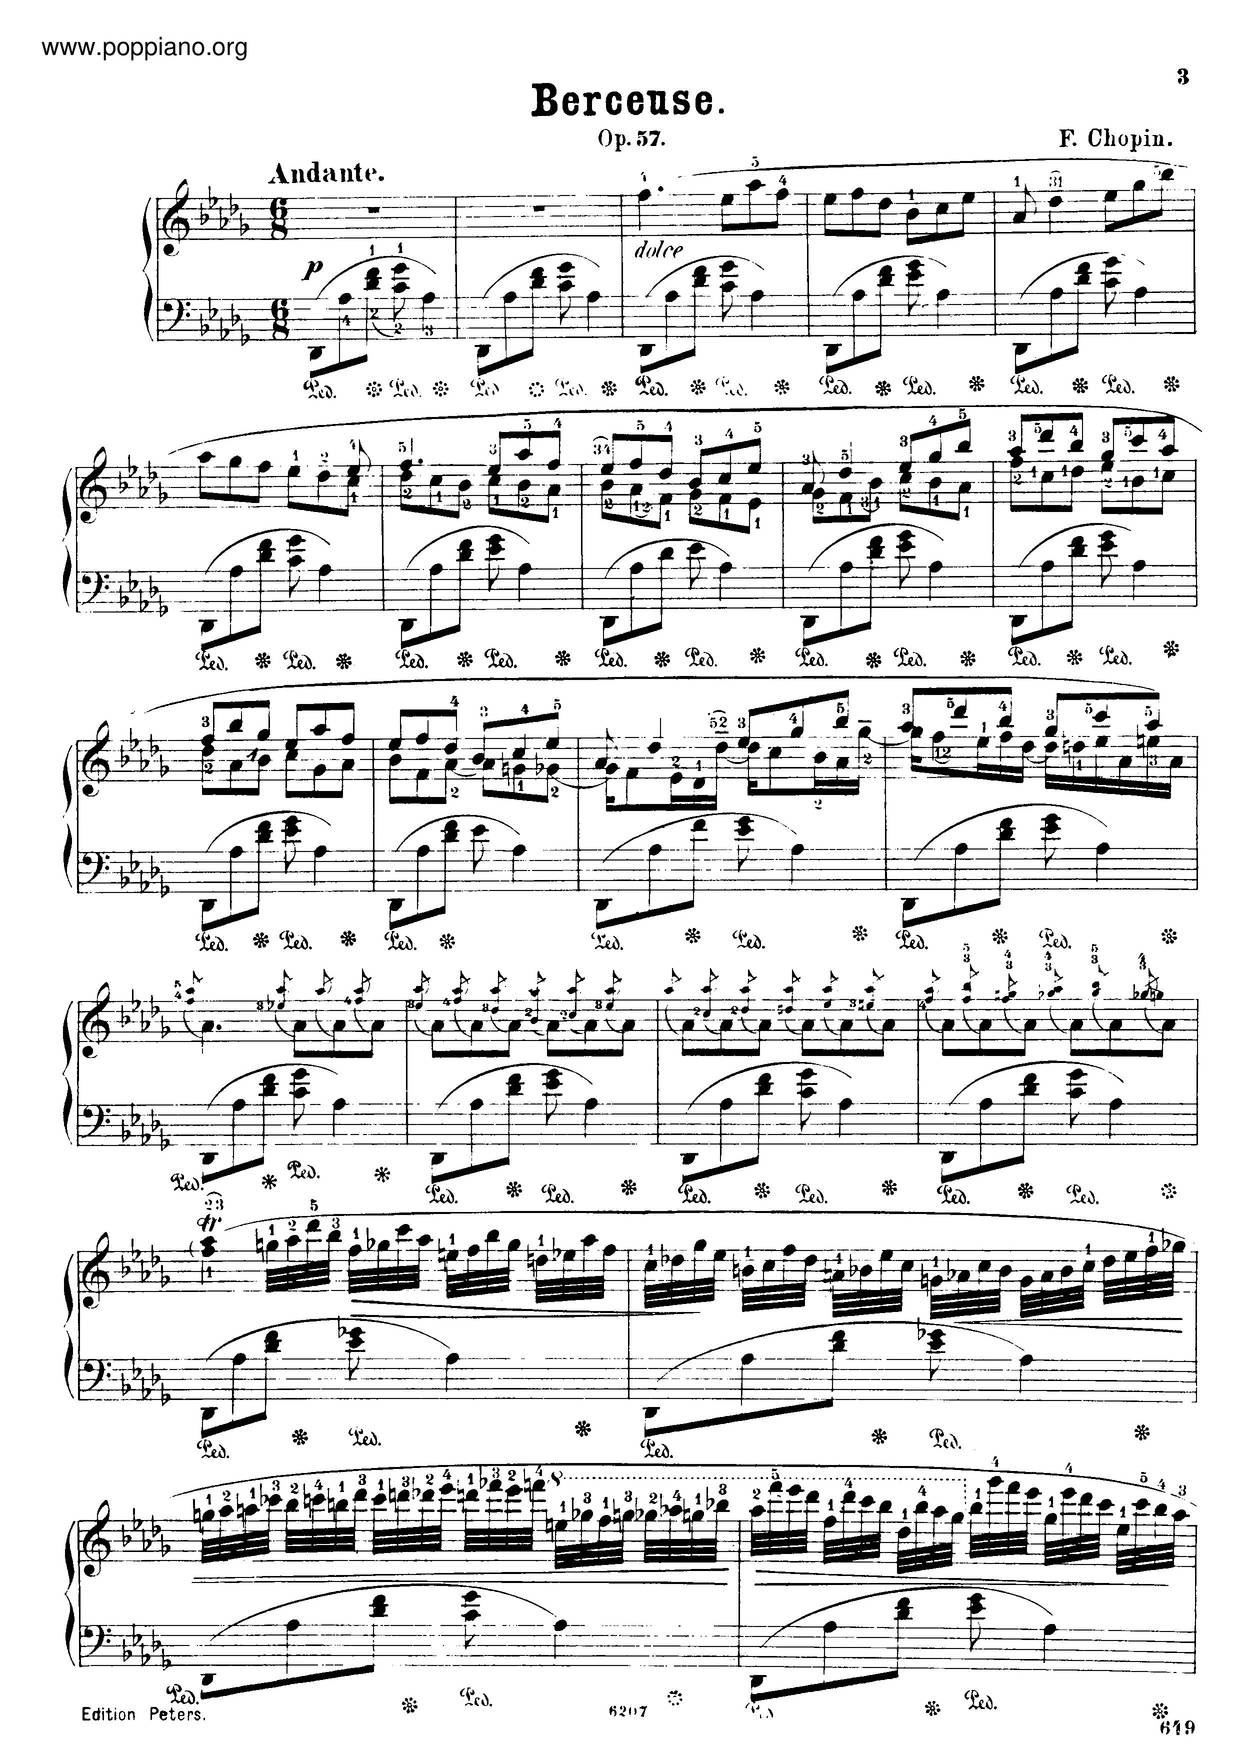 Berceuse, Op. 57 Score